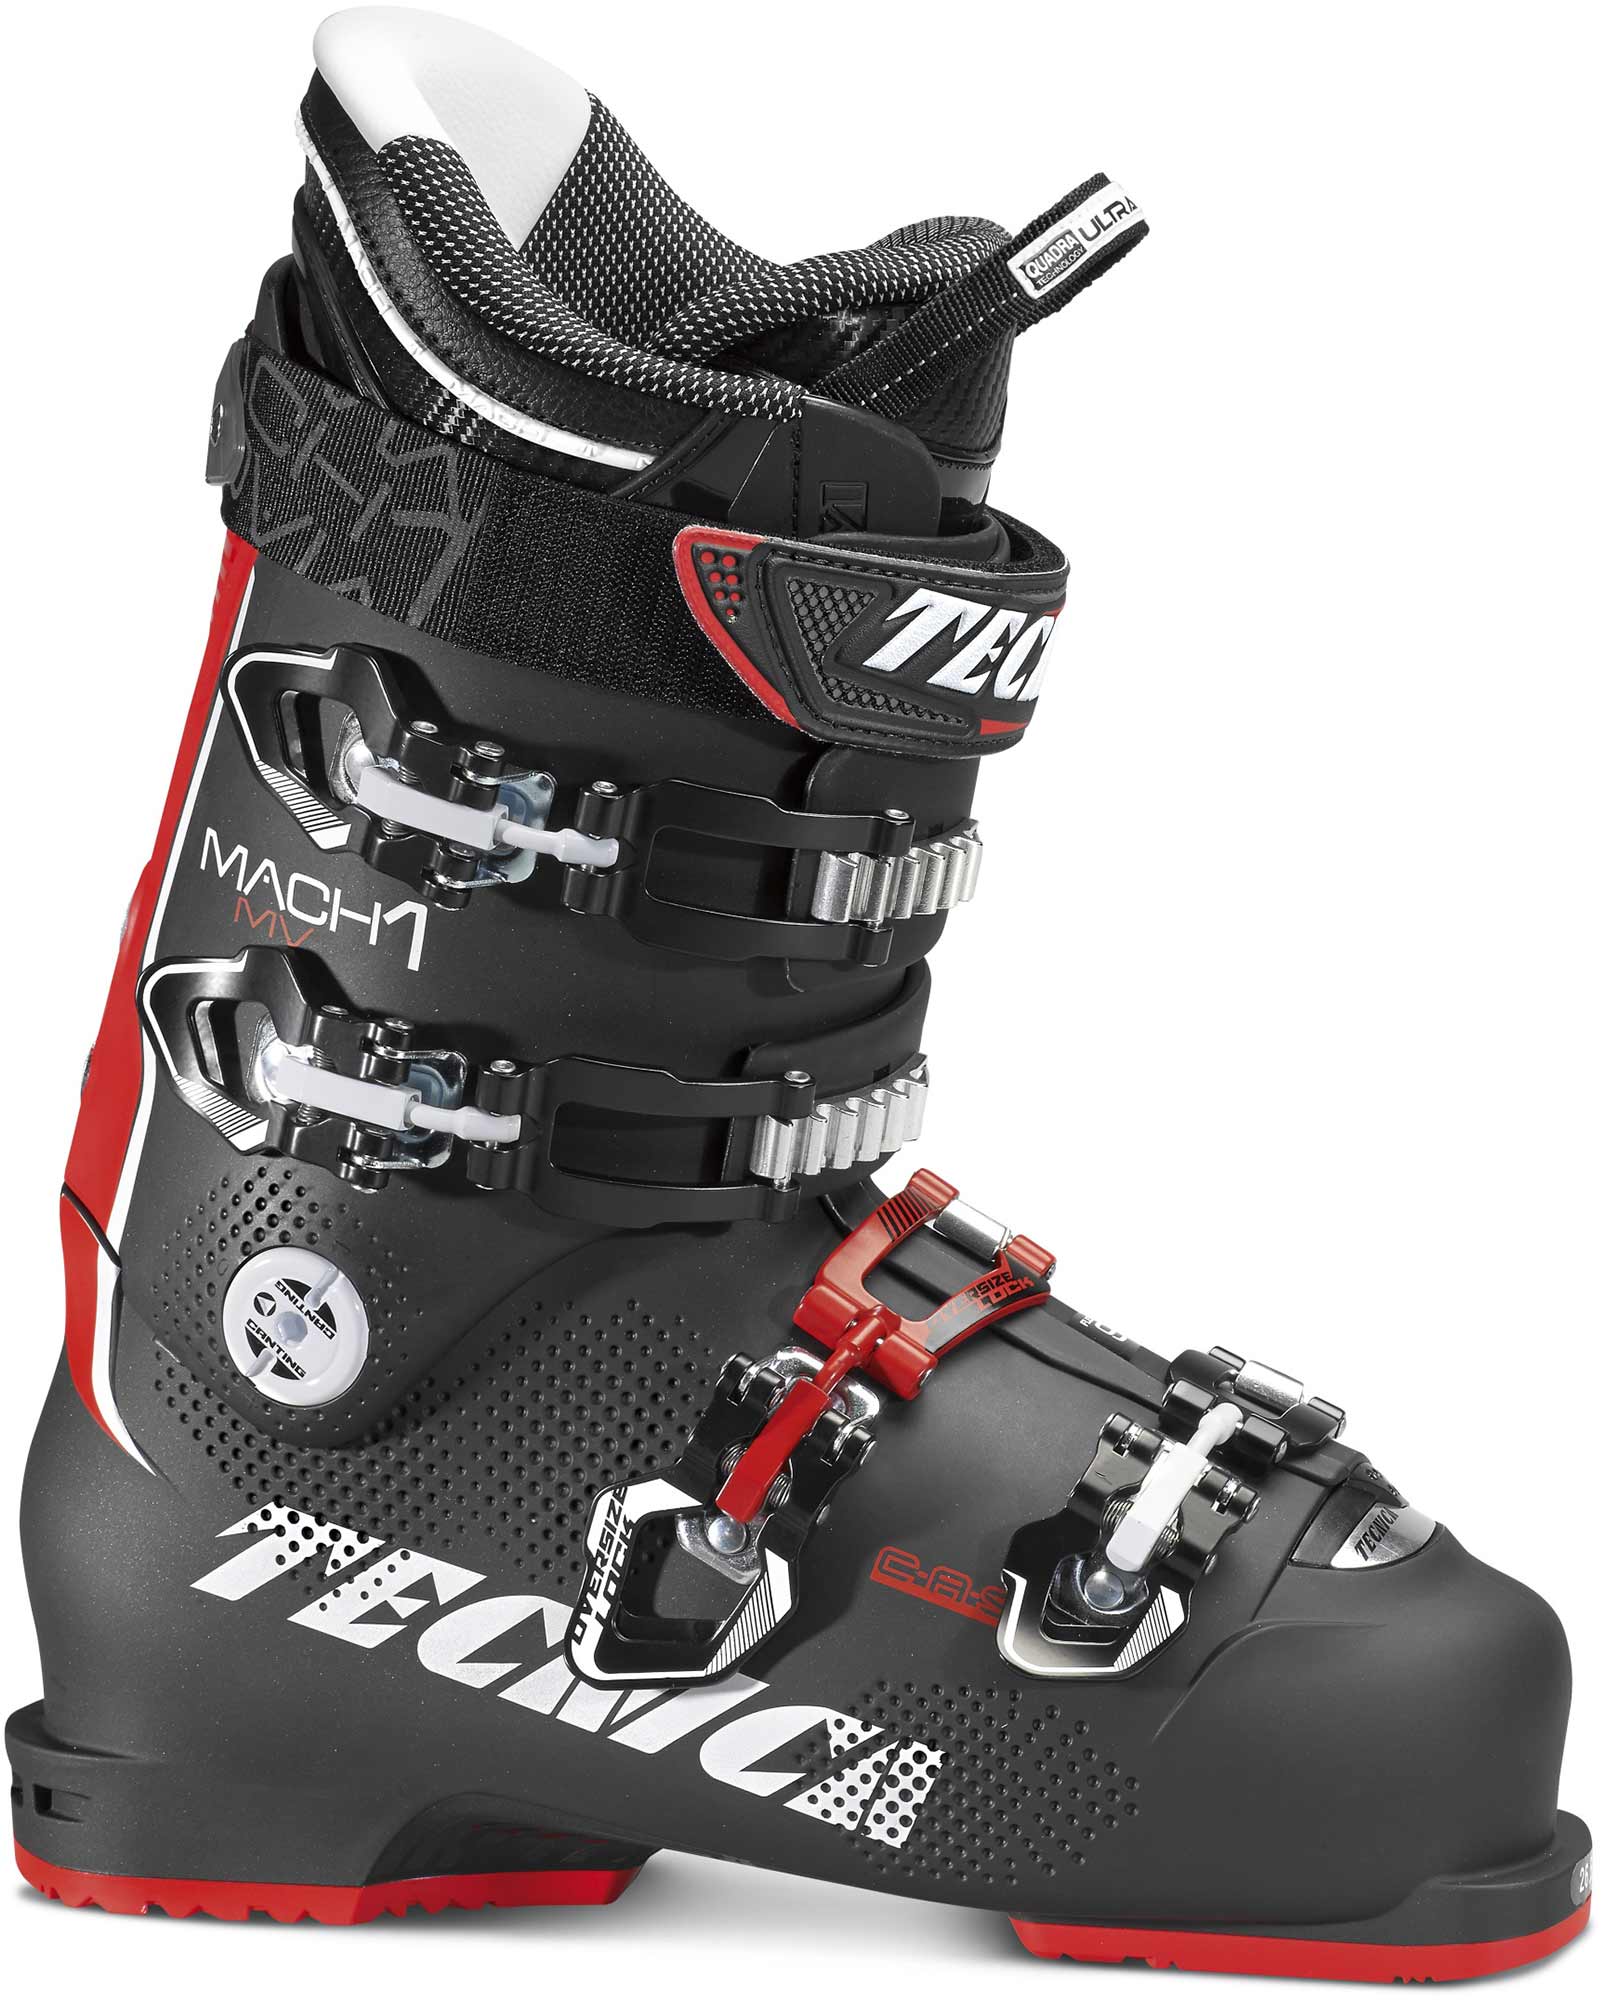 Downhill Ski Boots